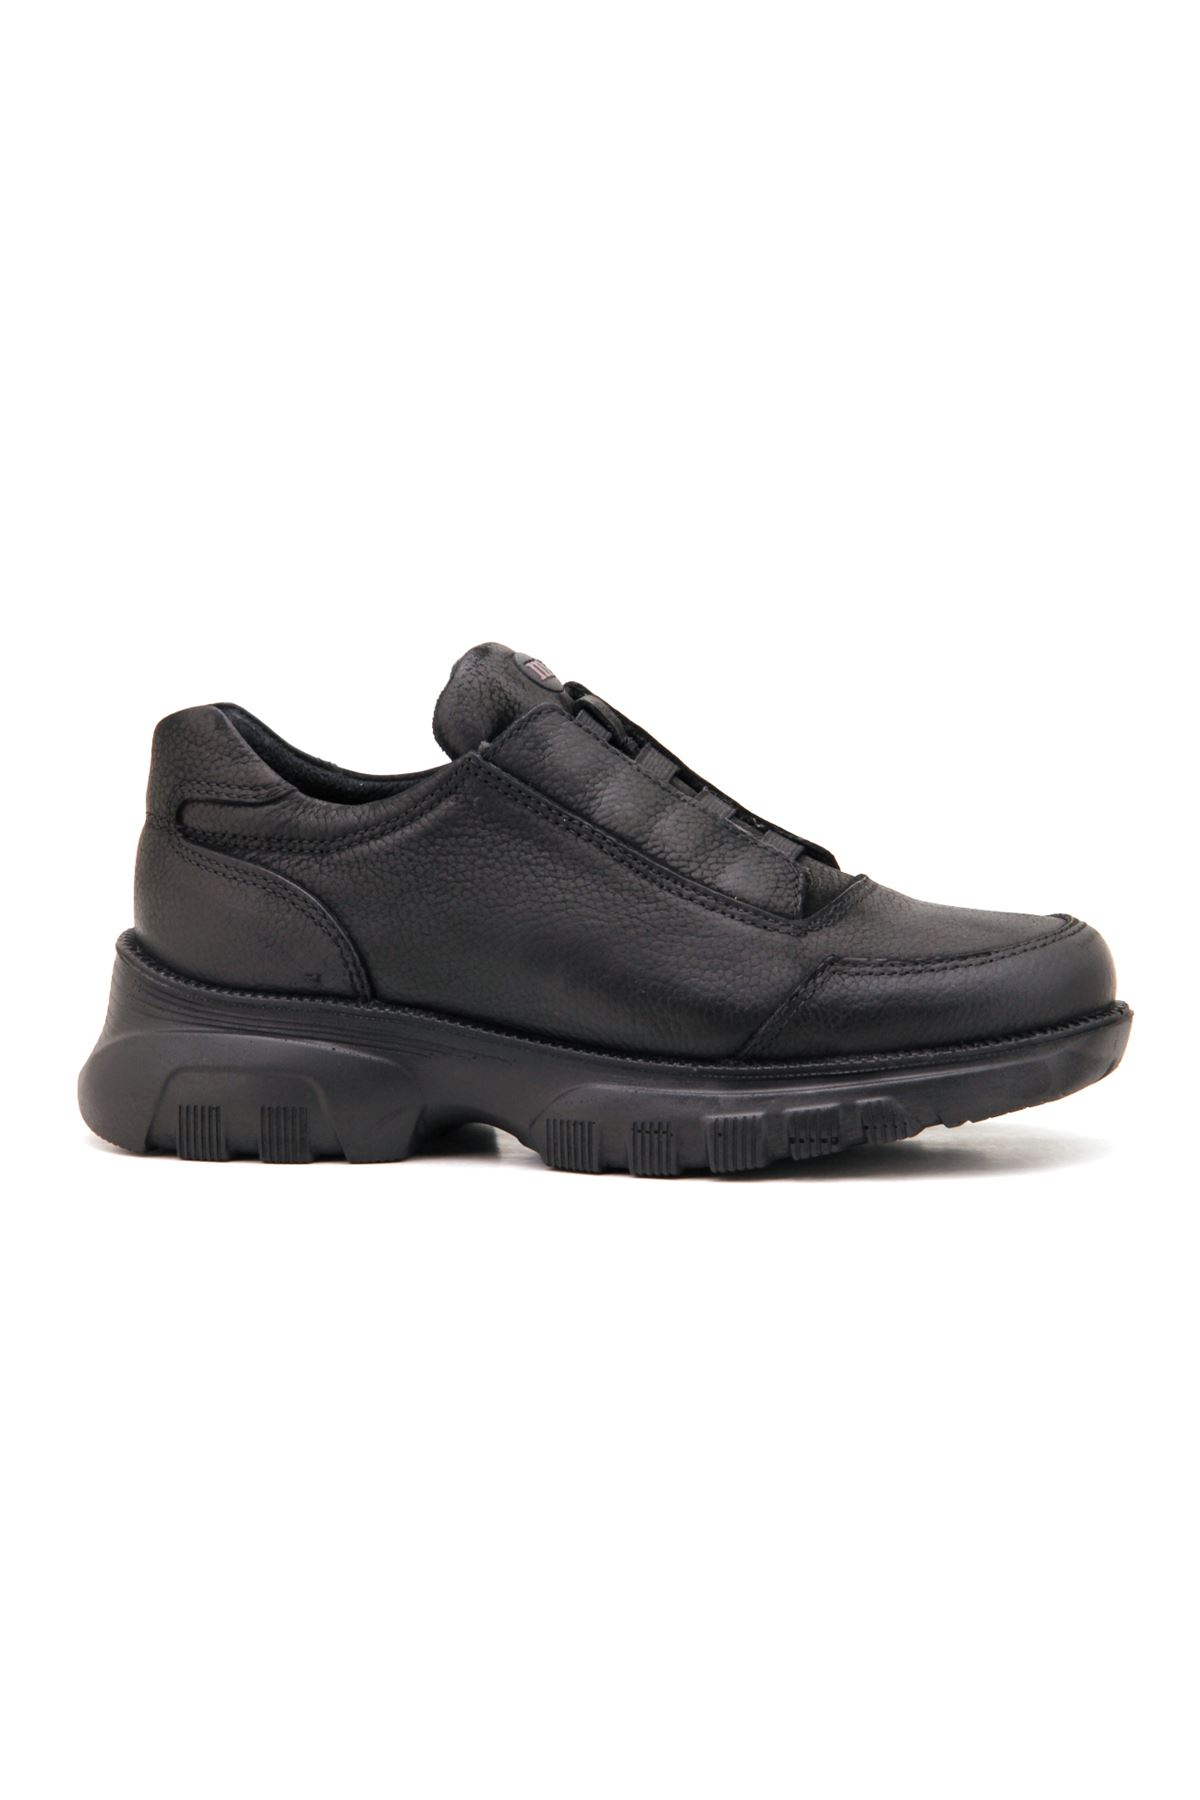 Mammamia D22KA-3115 Hakiki Deri Kadın Ayakkabı - Siyah Nubuk